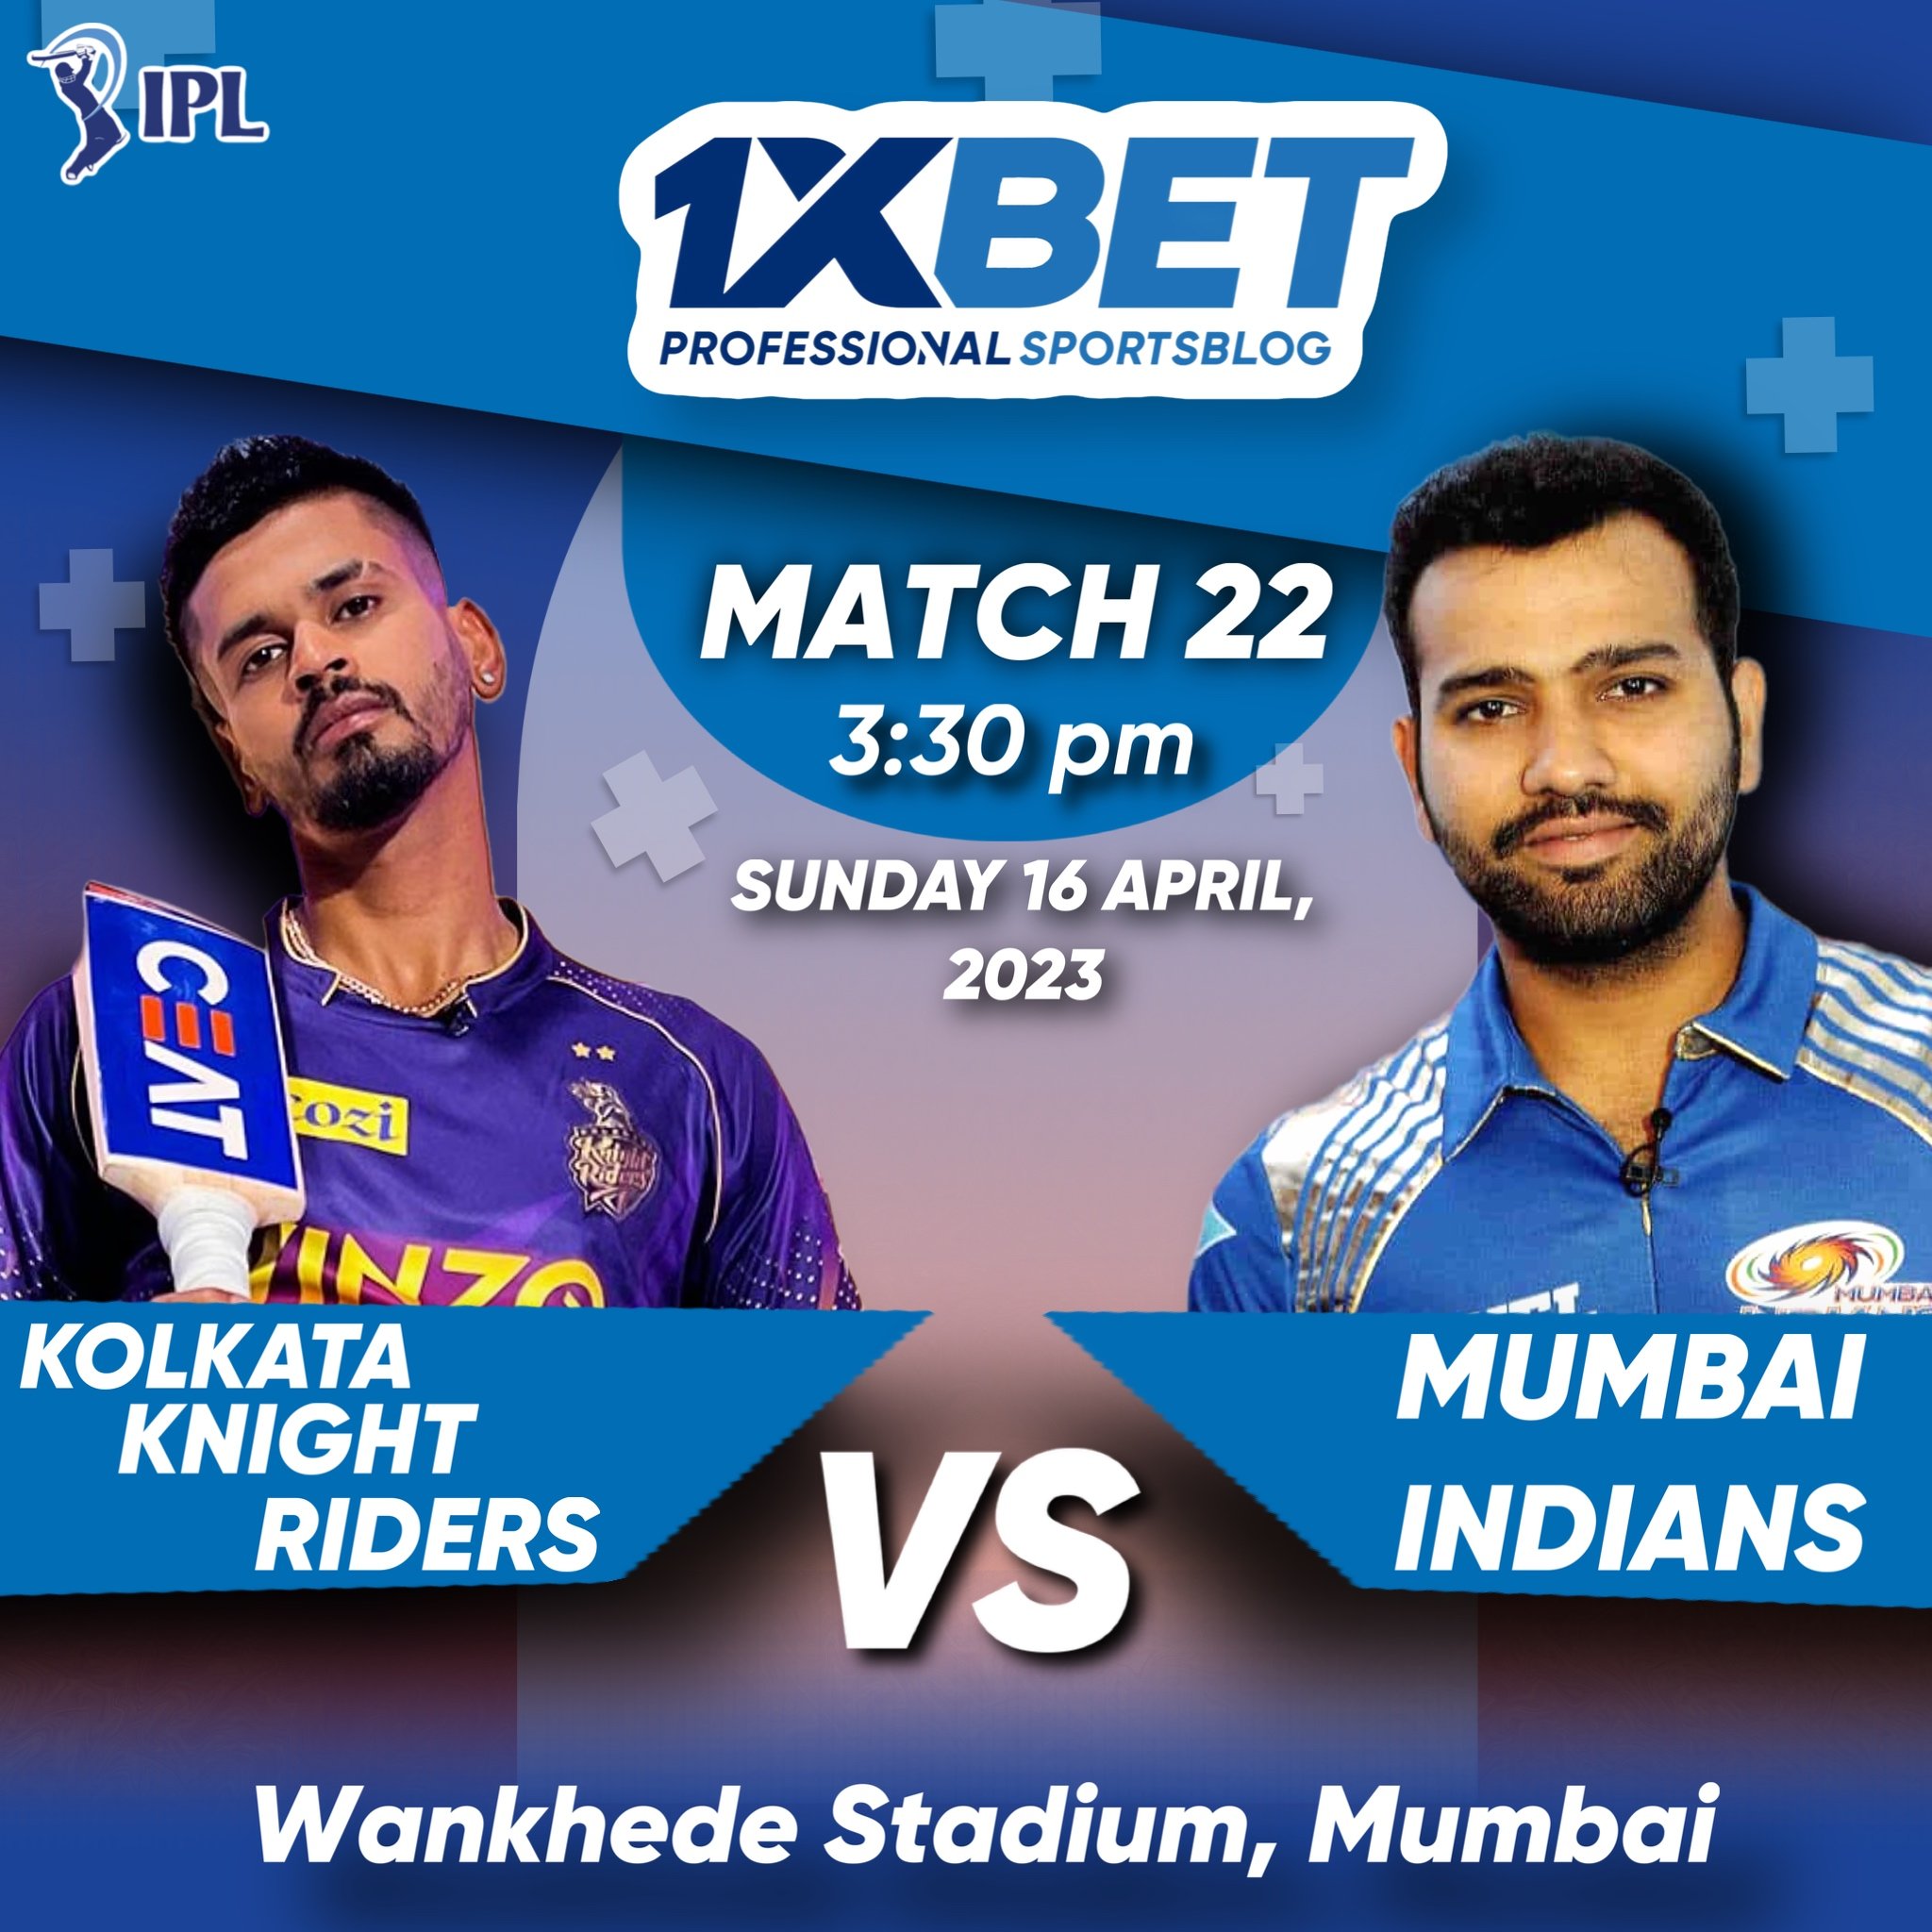 Mumbai Indians vs Kolkata Knight Riders, IPL 2023